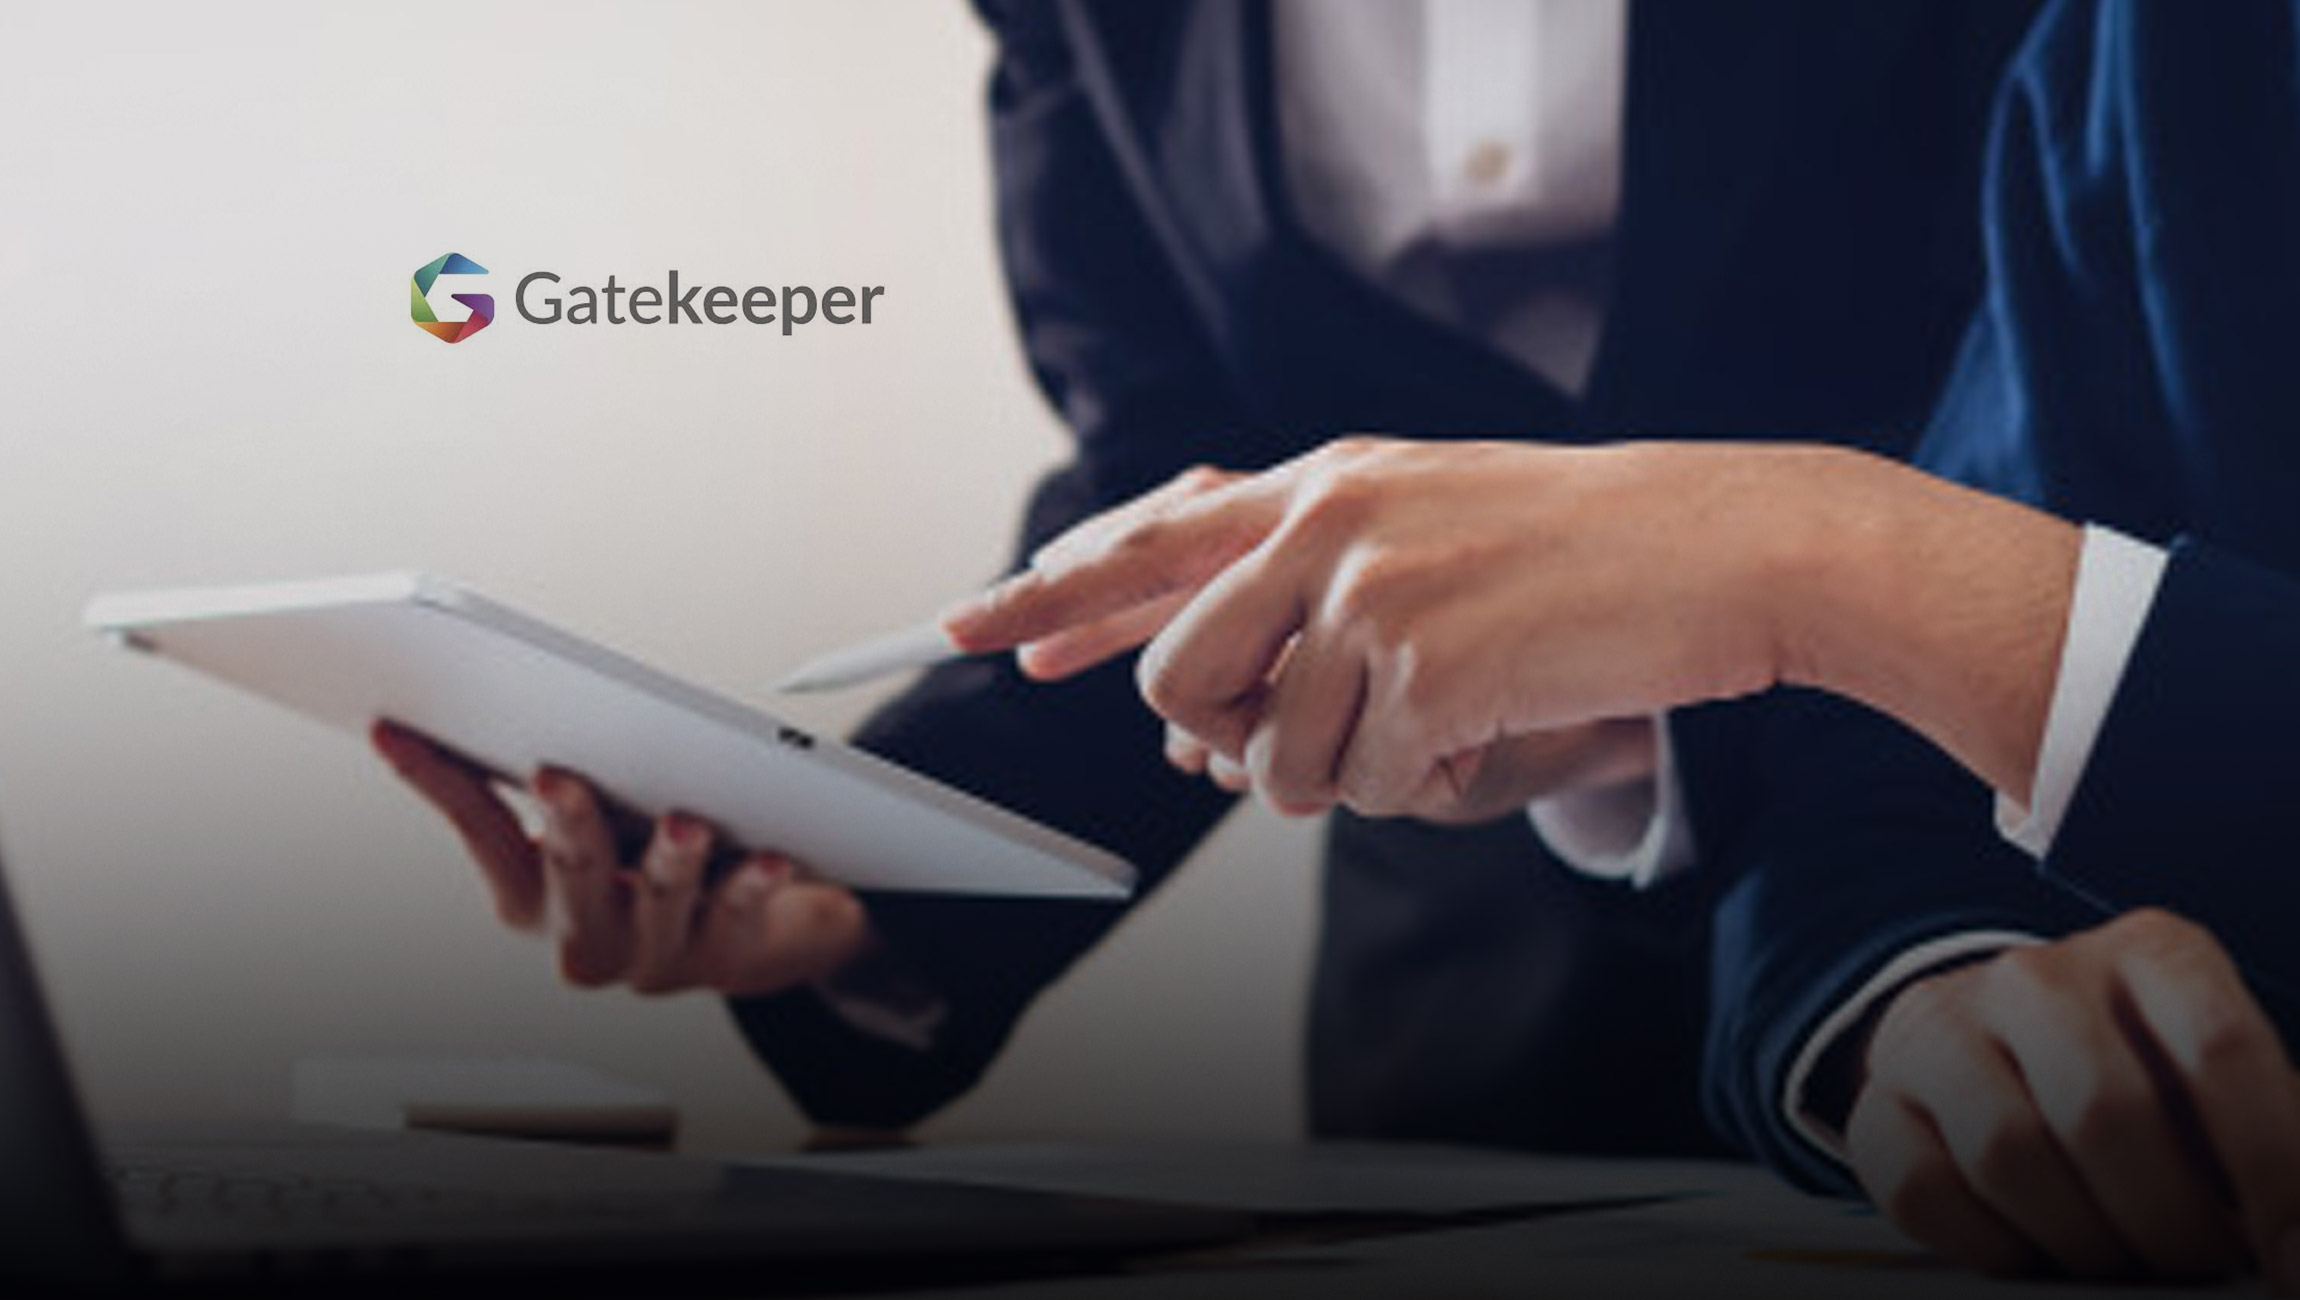 Gatekeeper Achieves “Built for NetSuite” Status